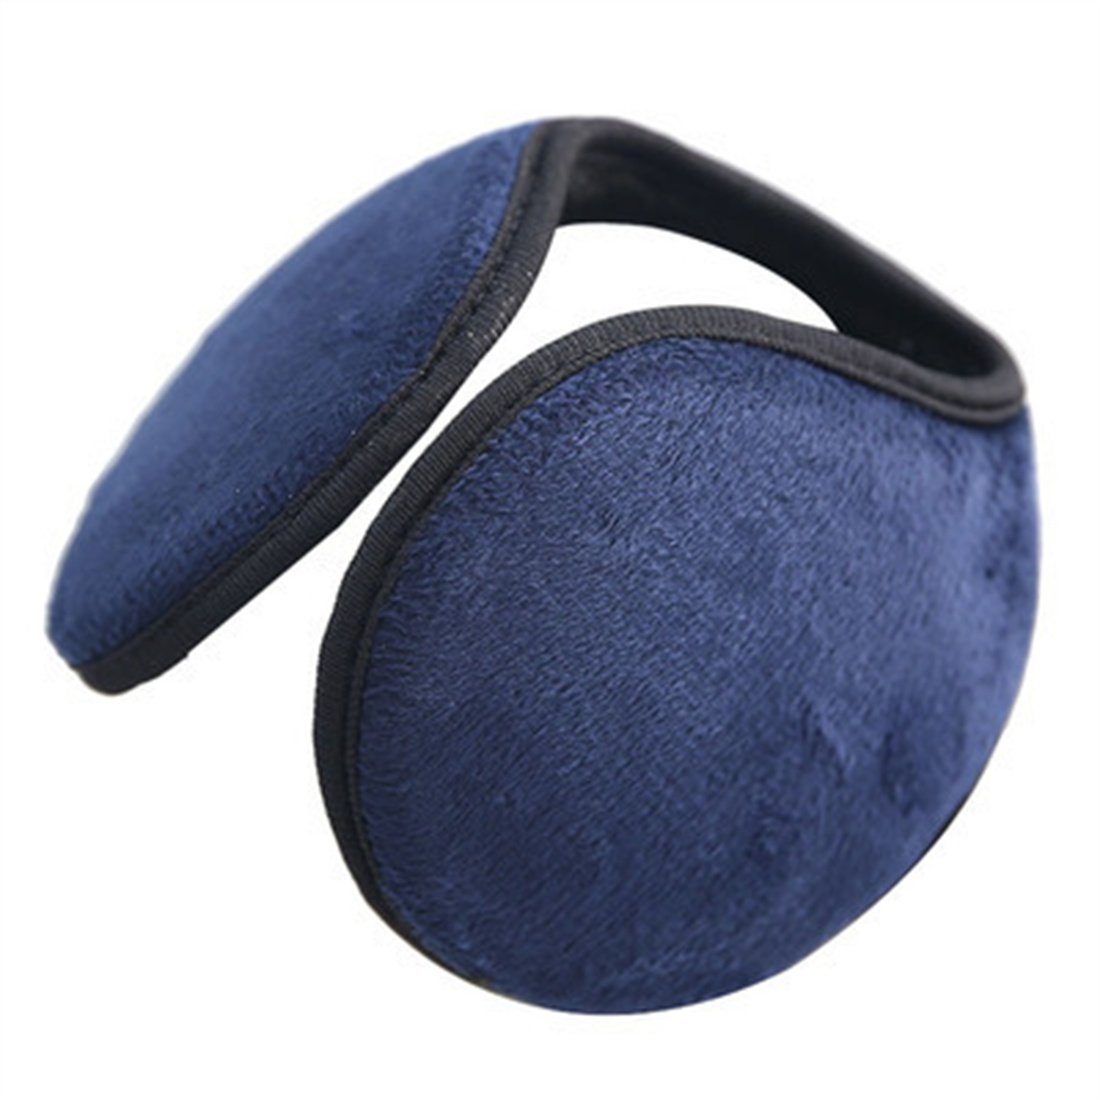 Gehörschutz Ohrenschützer, blau Ohrenschützer DÖRÖY Ohrenmütze Plüsch Winter warme unisex